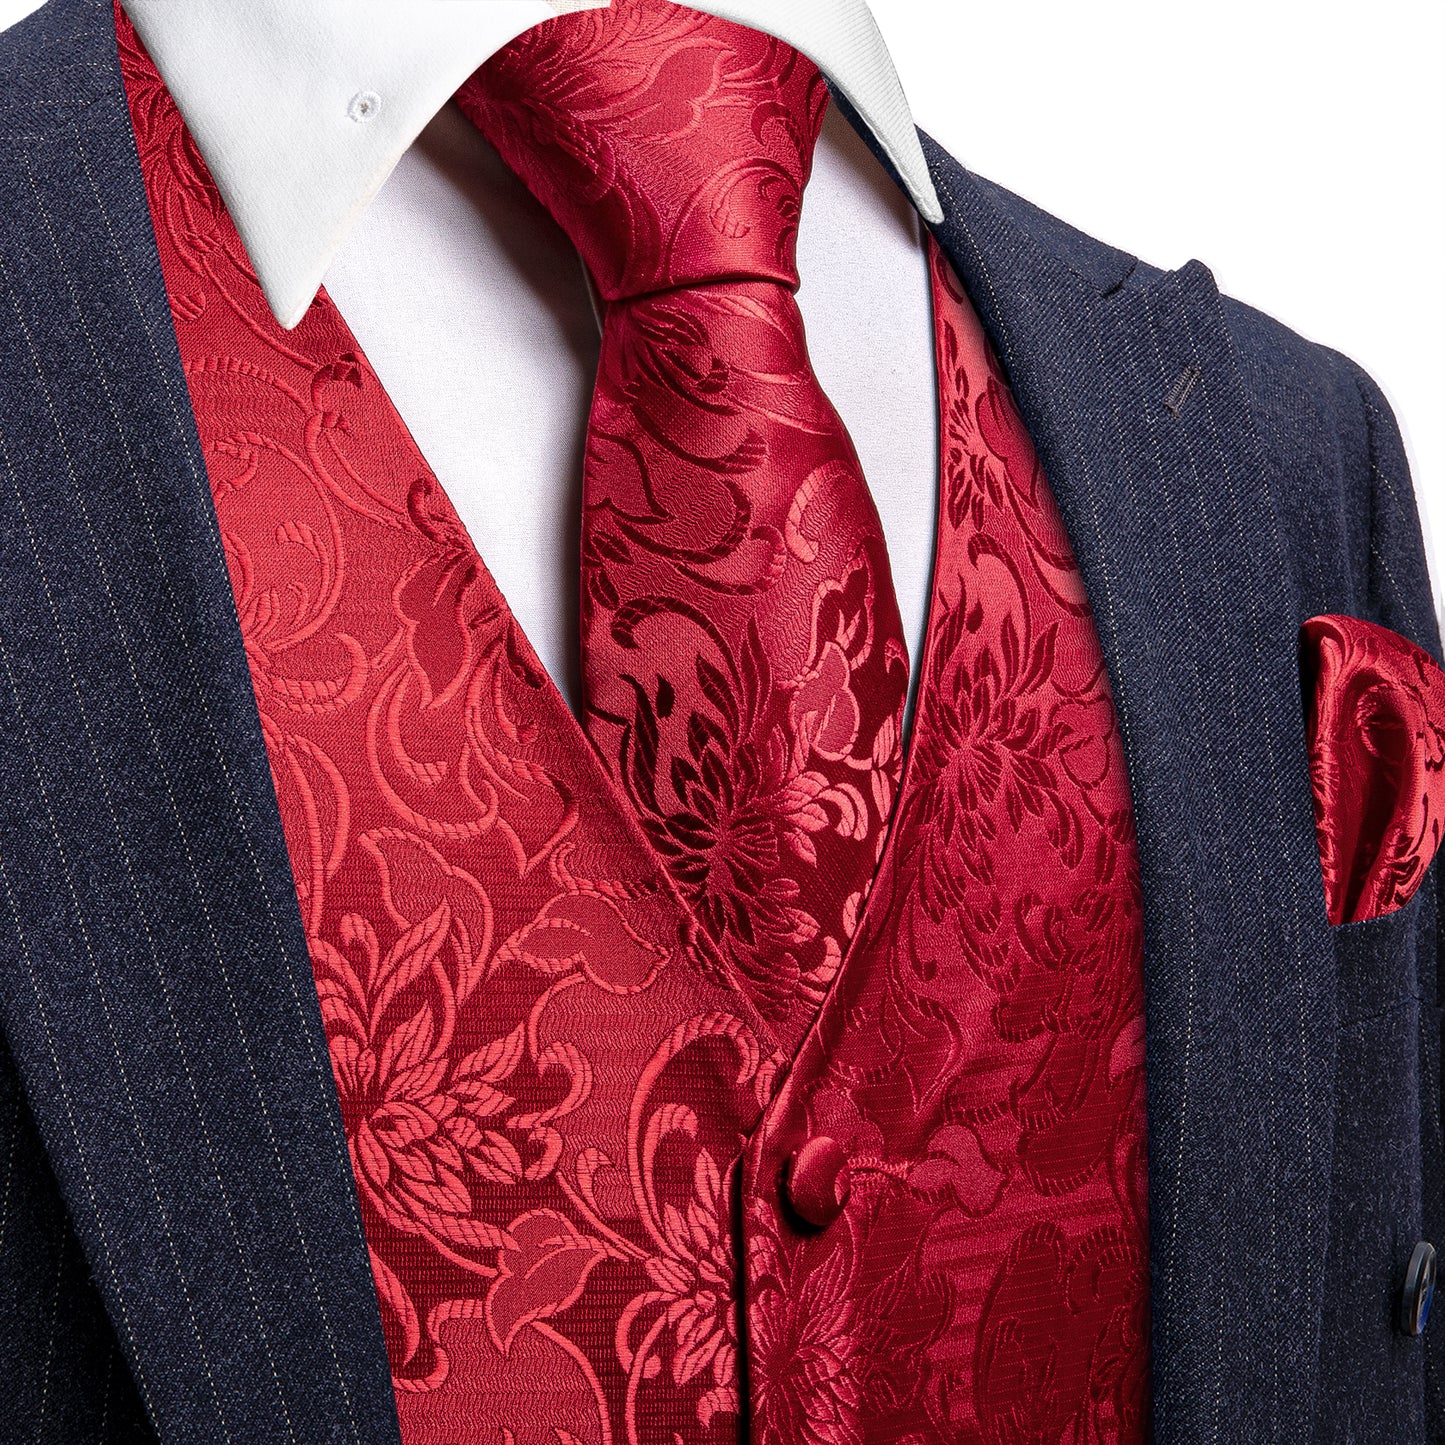 Designer Floral Waistcoat Silky Novelty Vest Lava Red